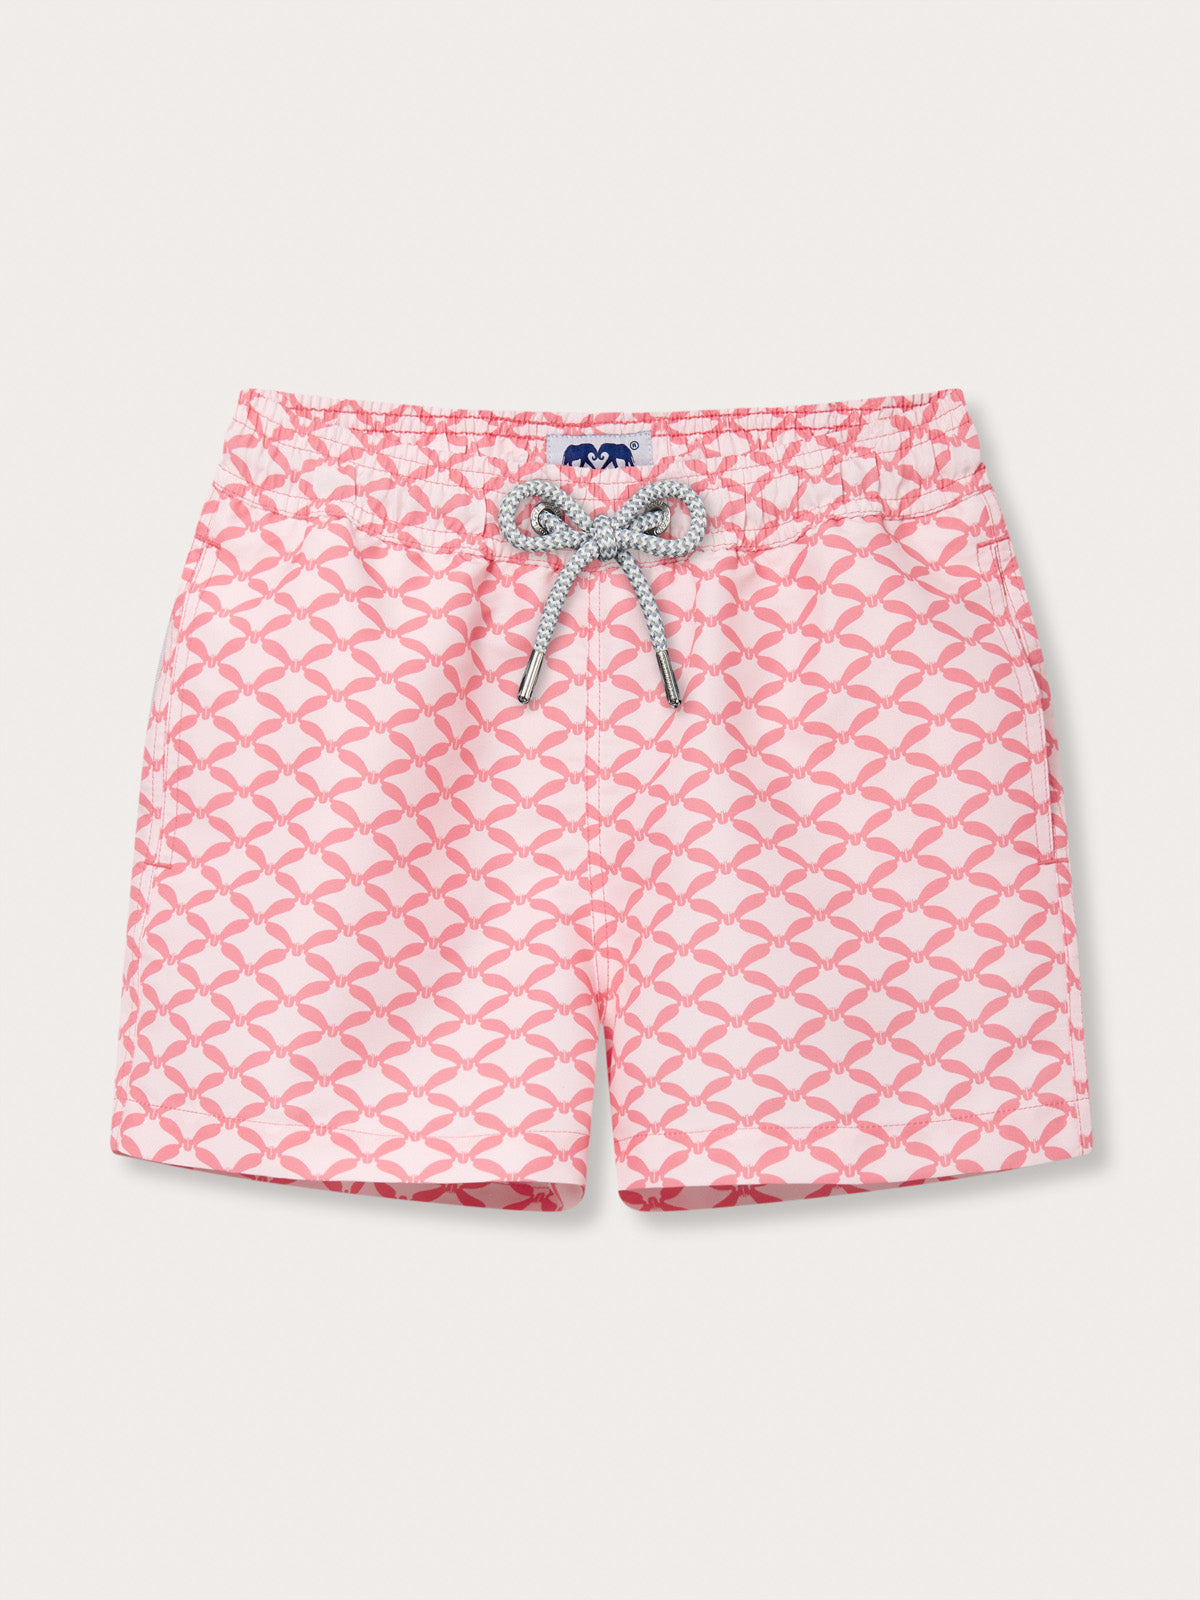 Boys Ray Rhythm Staniel Swim Shorts with diamond geometric print of manta rays in watermelon and light pink.